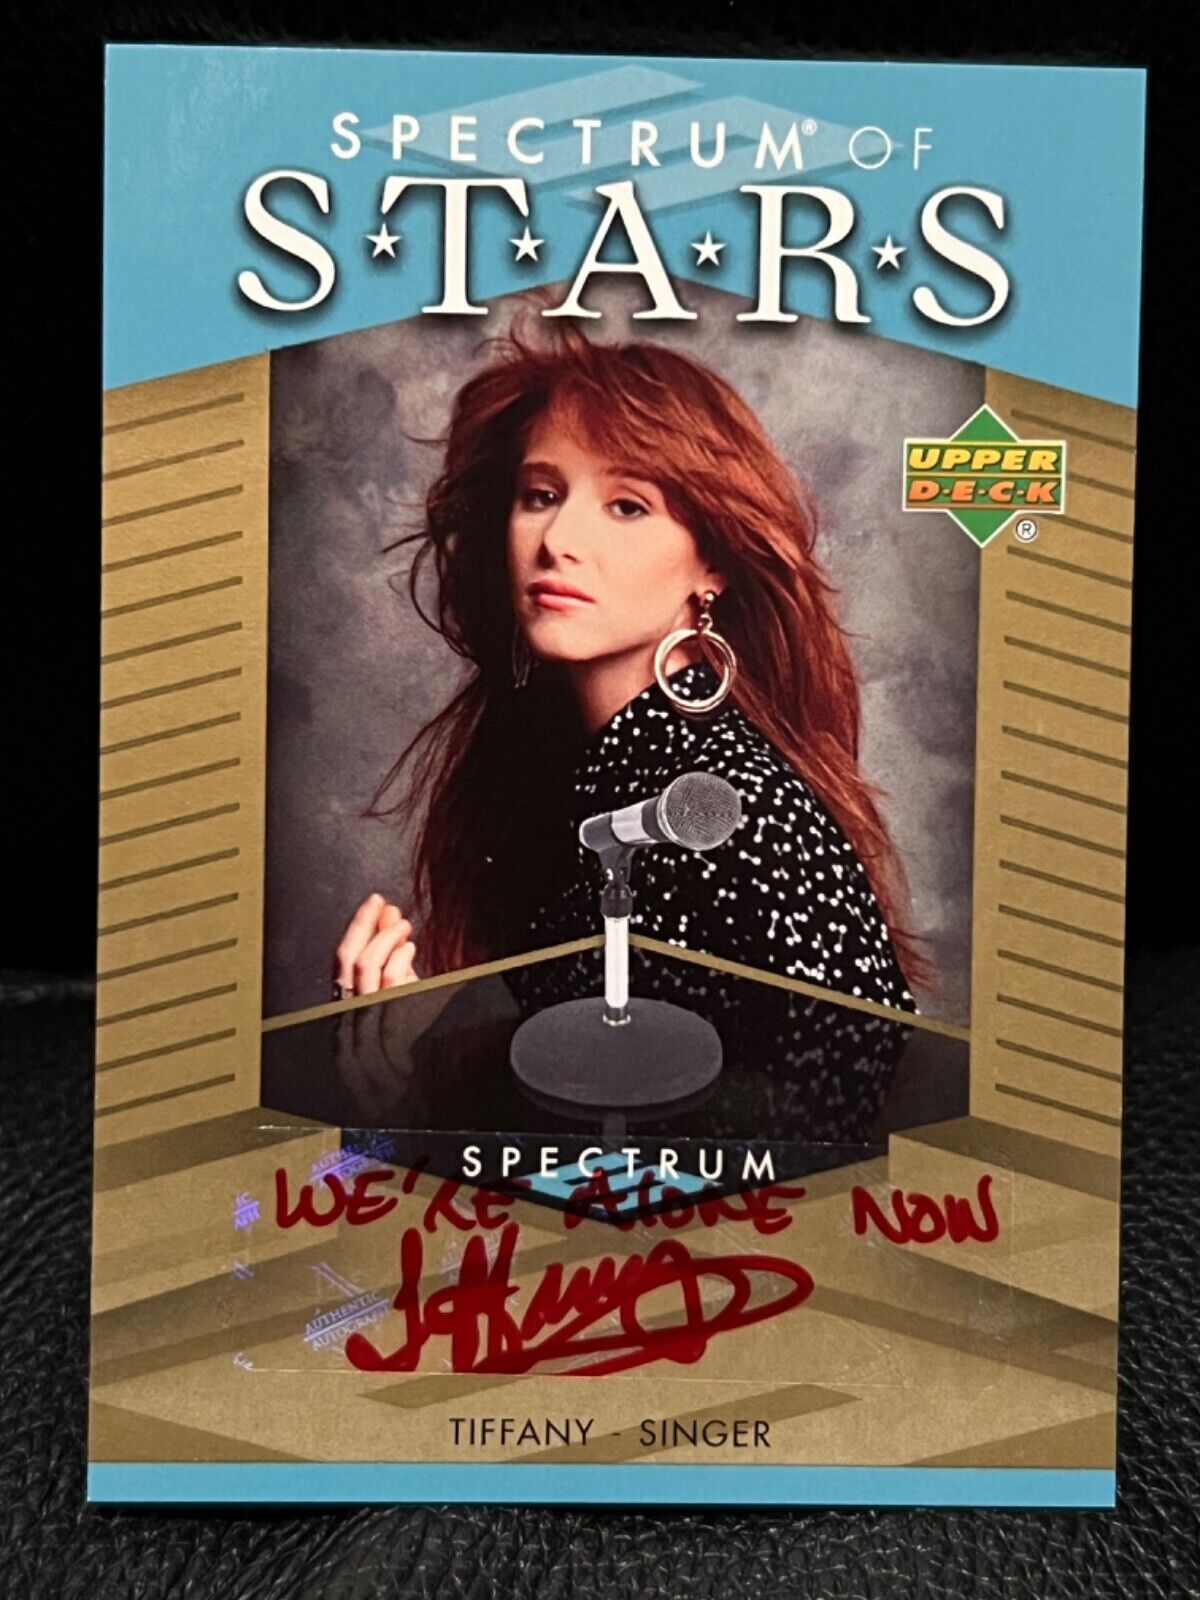 2007 Upper Deck Spectrum of Stars Tiffany Darwish autograph “We’re Alone Now”